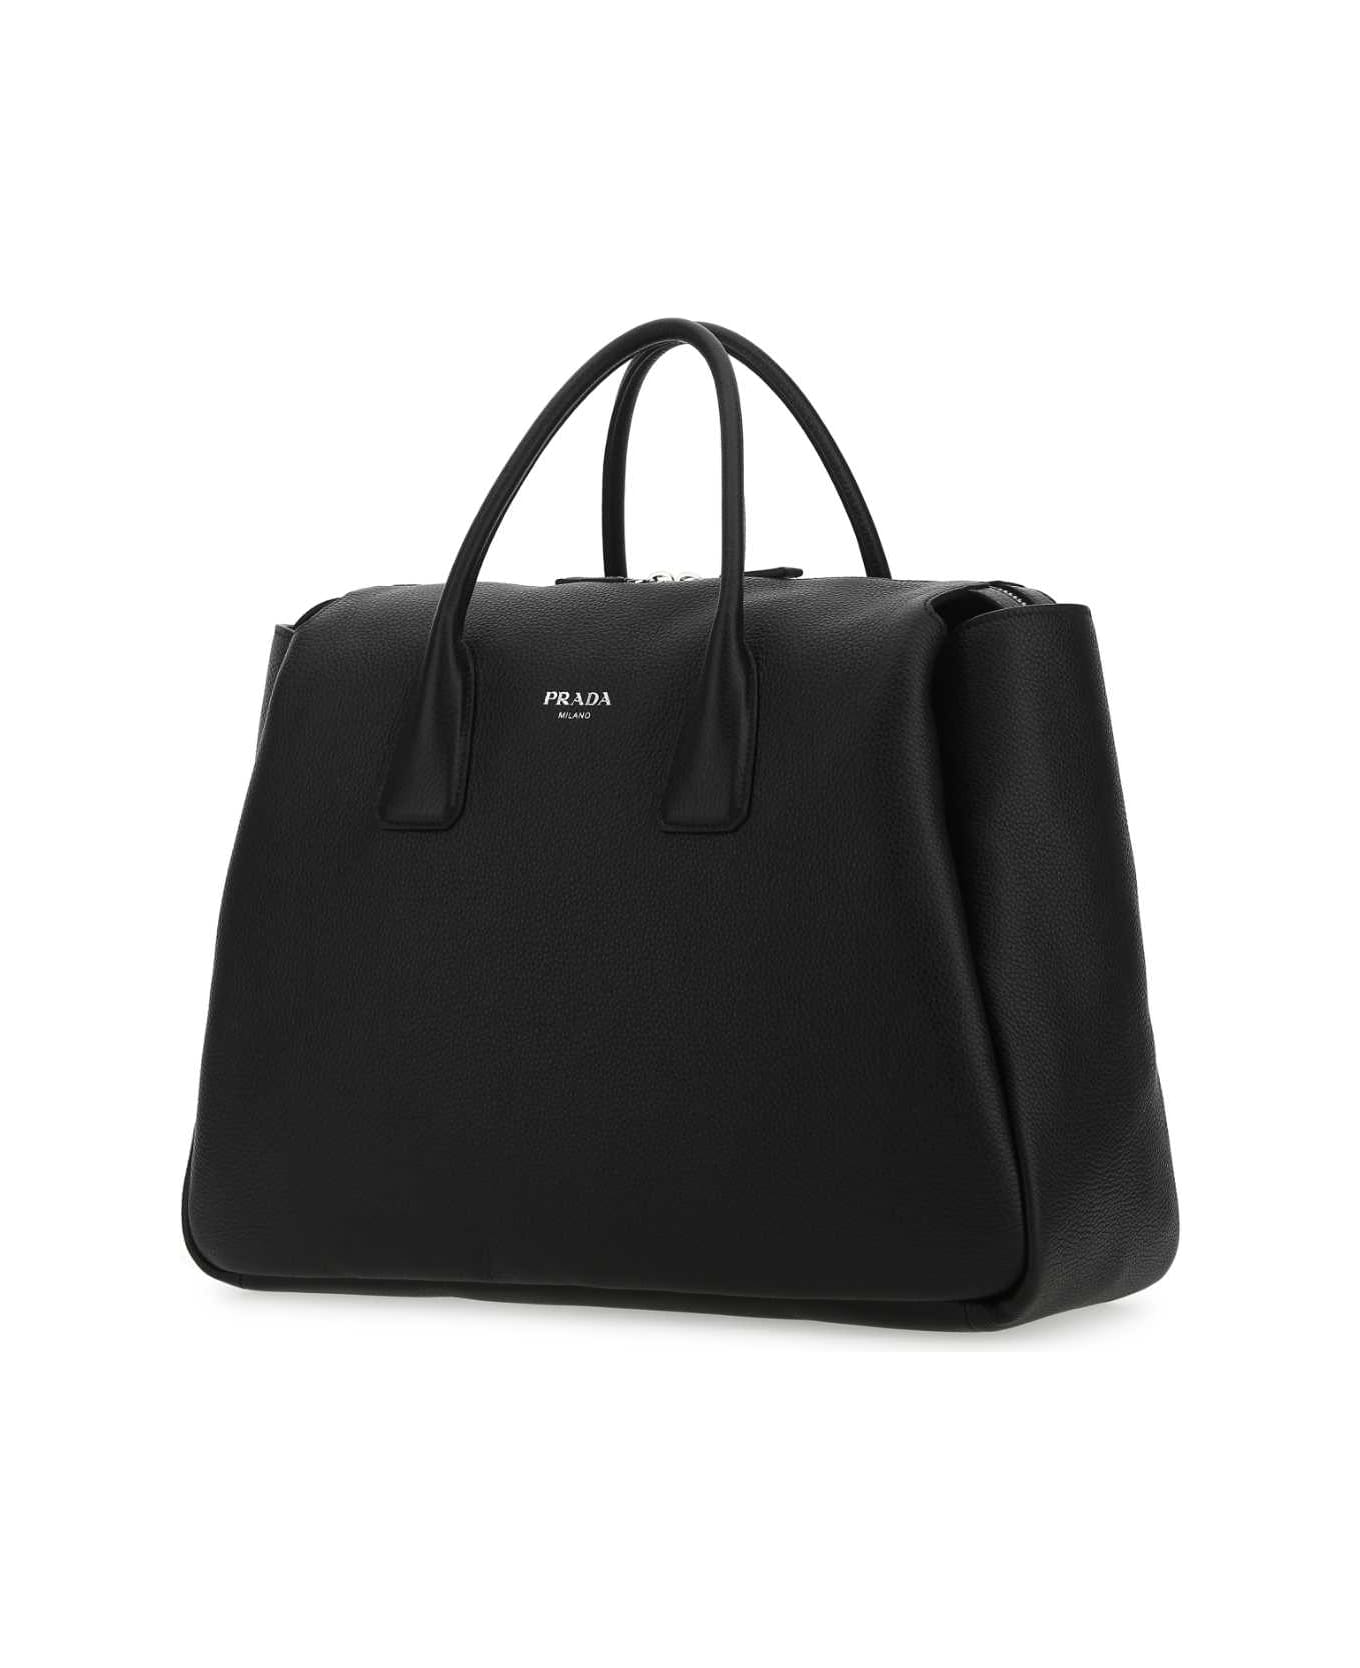 Prada Black Leather Travel Bag - F0002